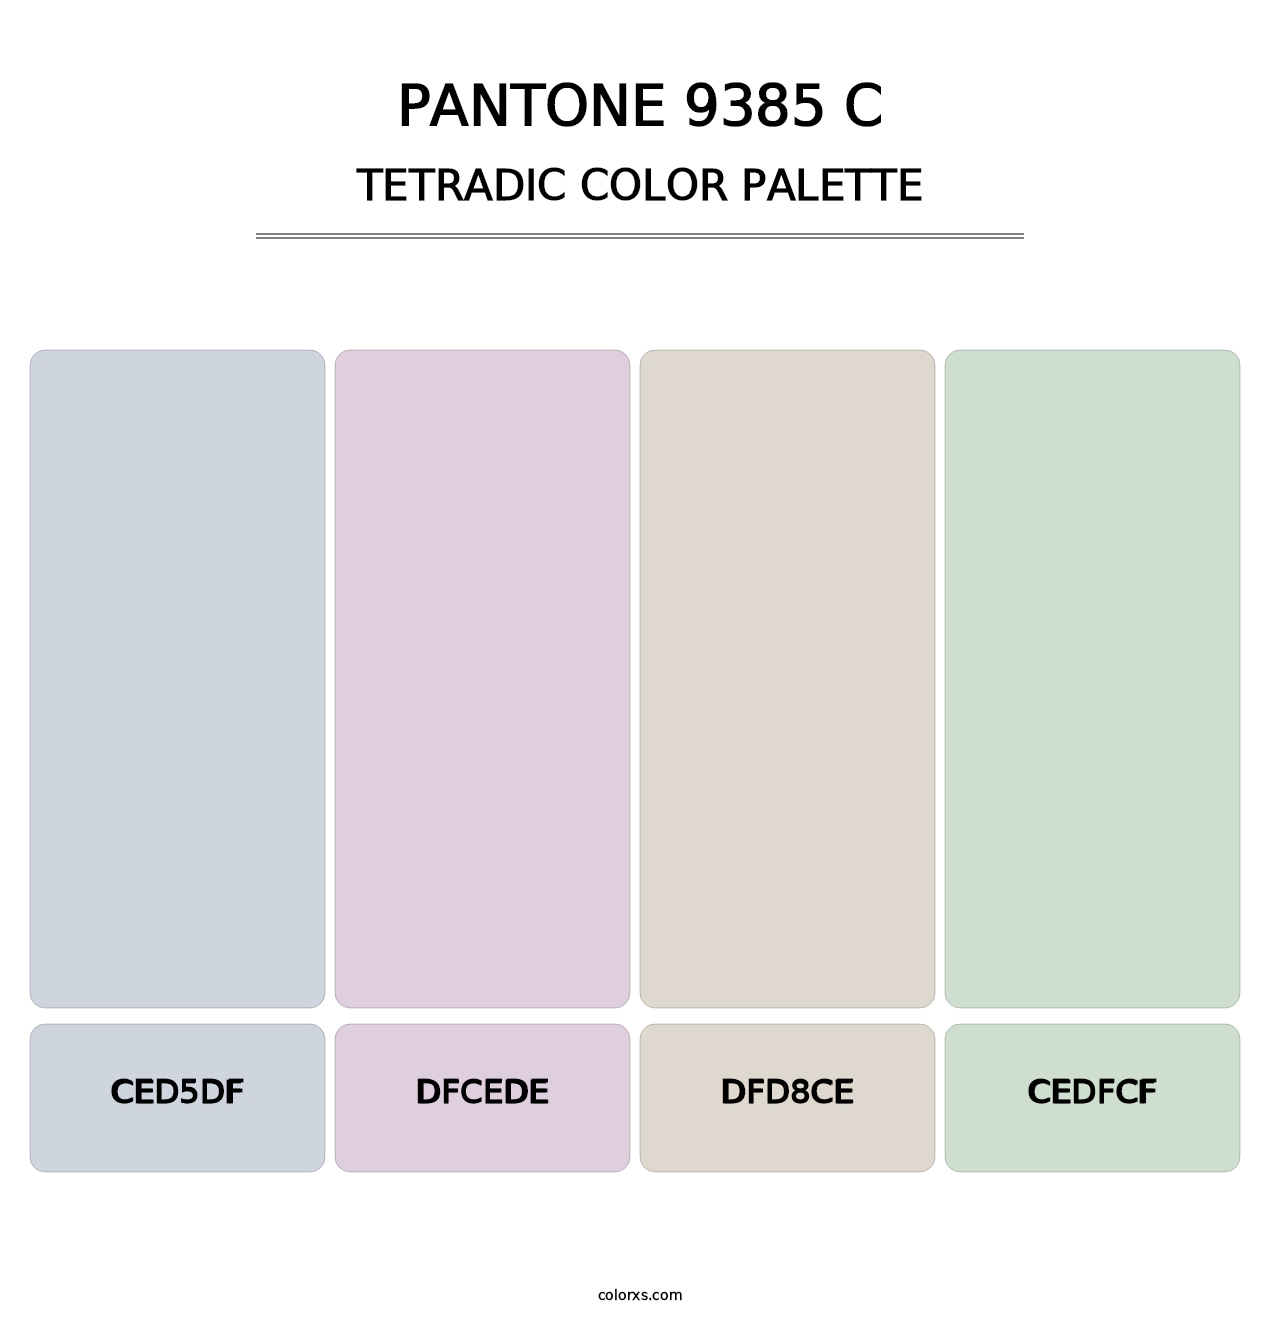 PANTONE 9385 C - Tetradic Color Palette